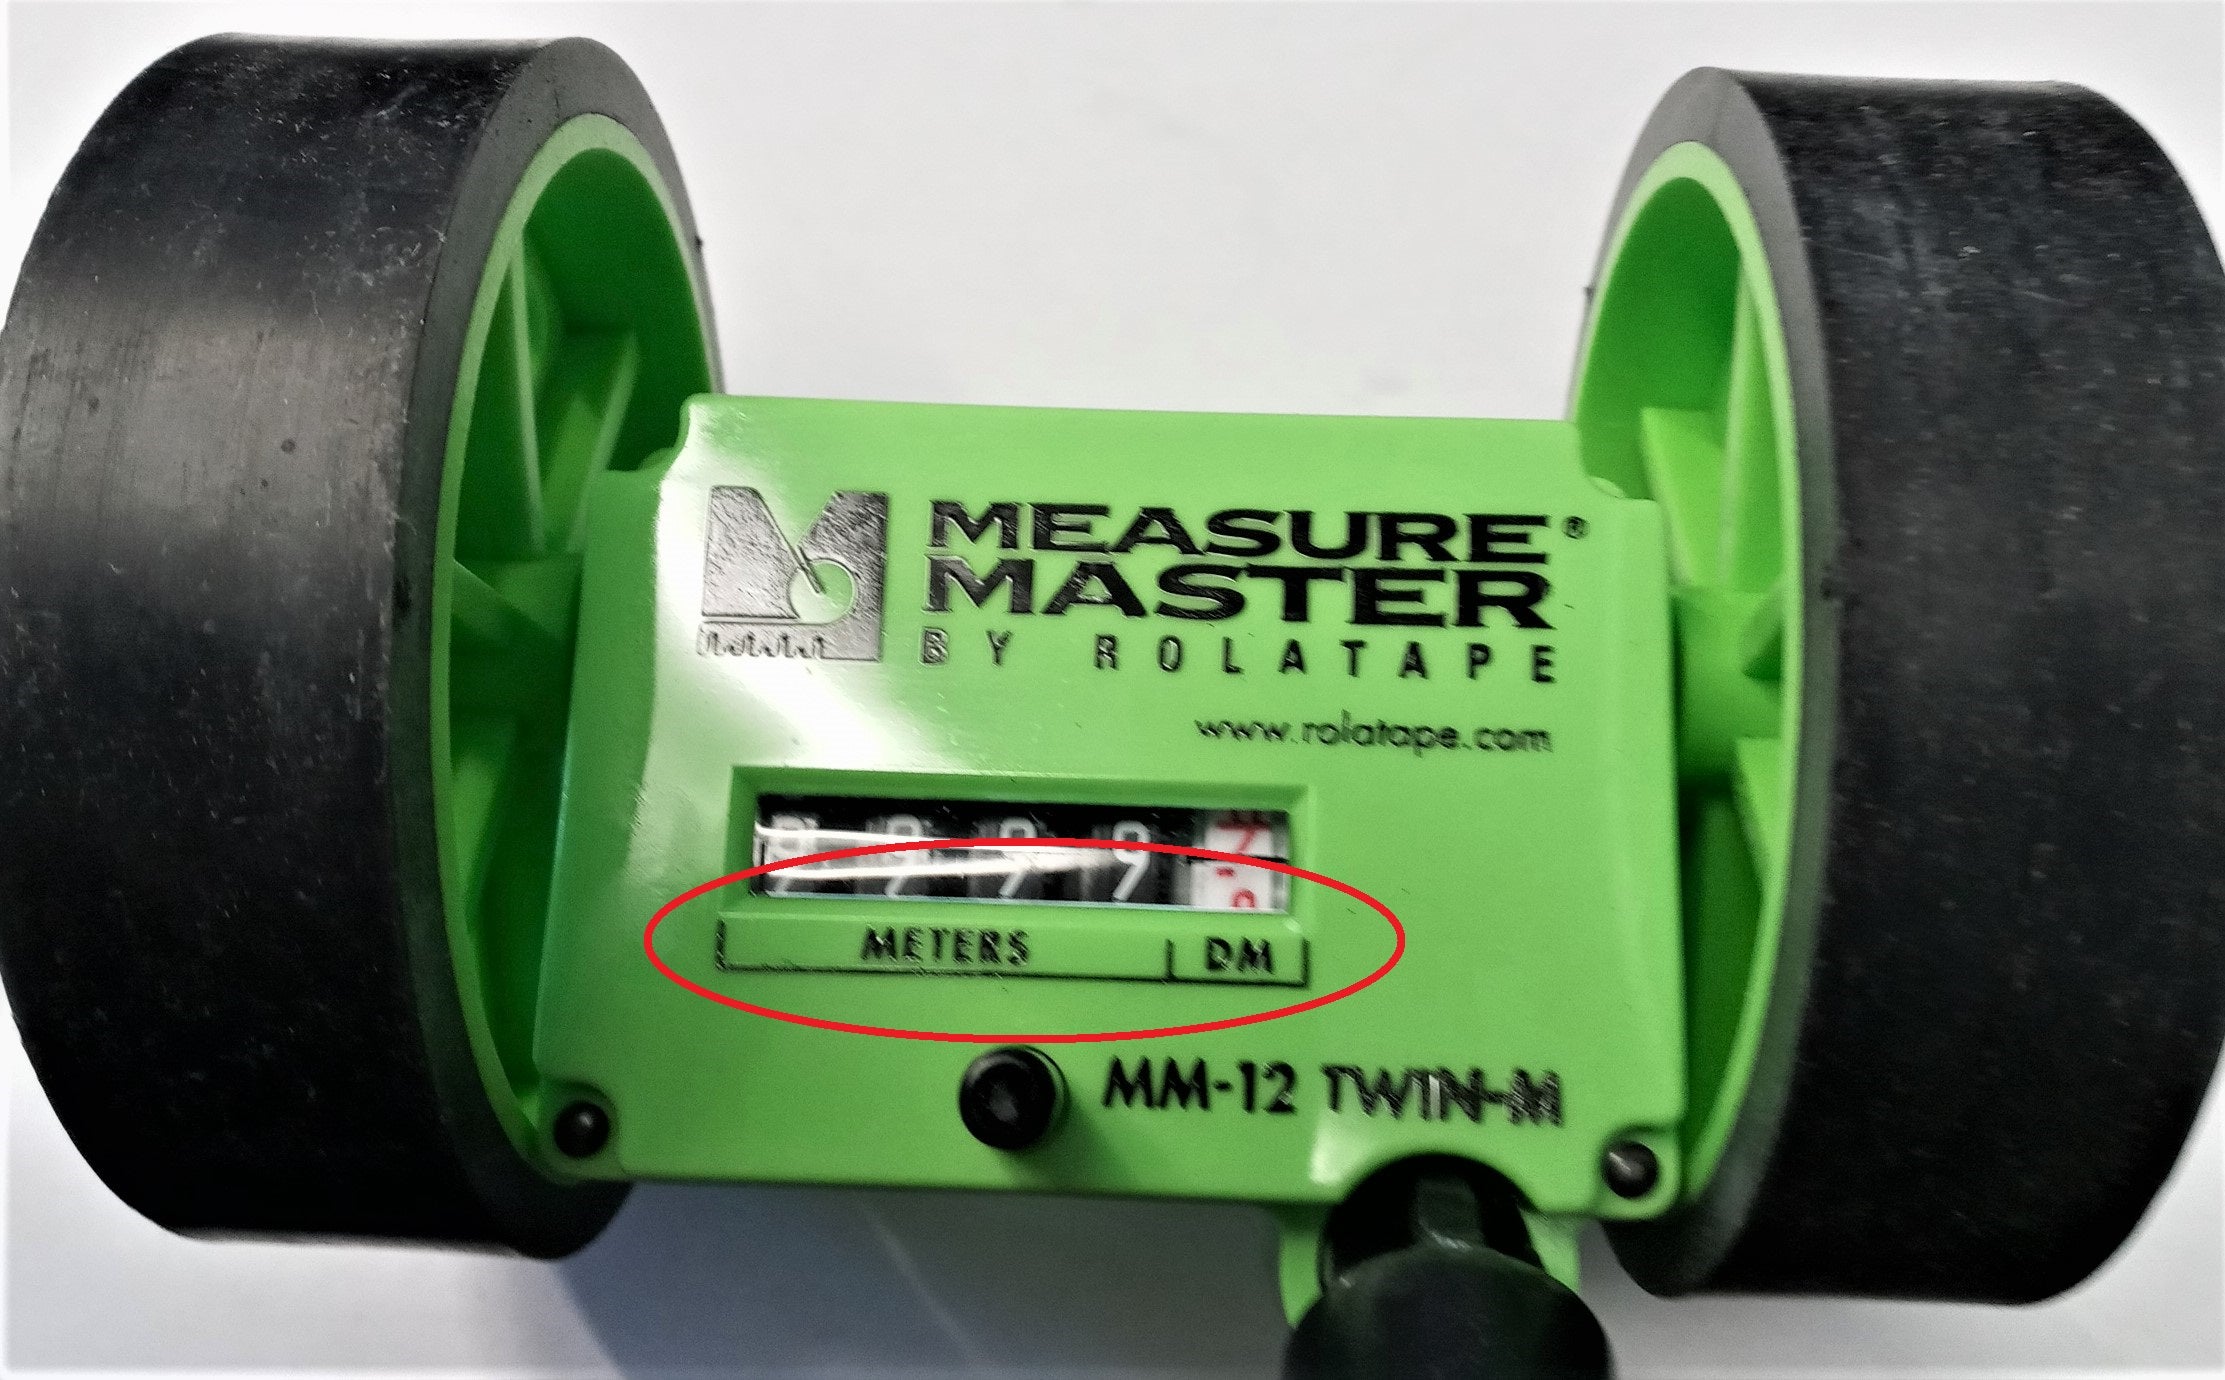 Measure Master By Rolatape MM-12 Twin Series (METRIC) Measuring Wheel USA